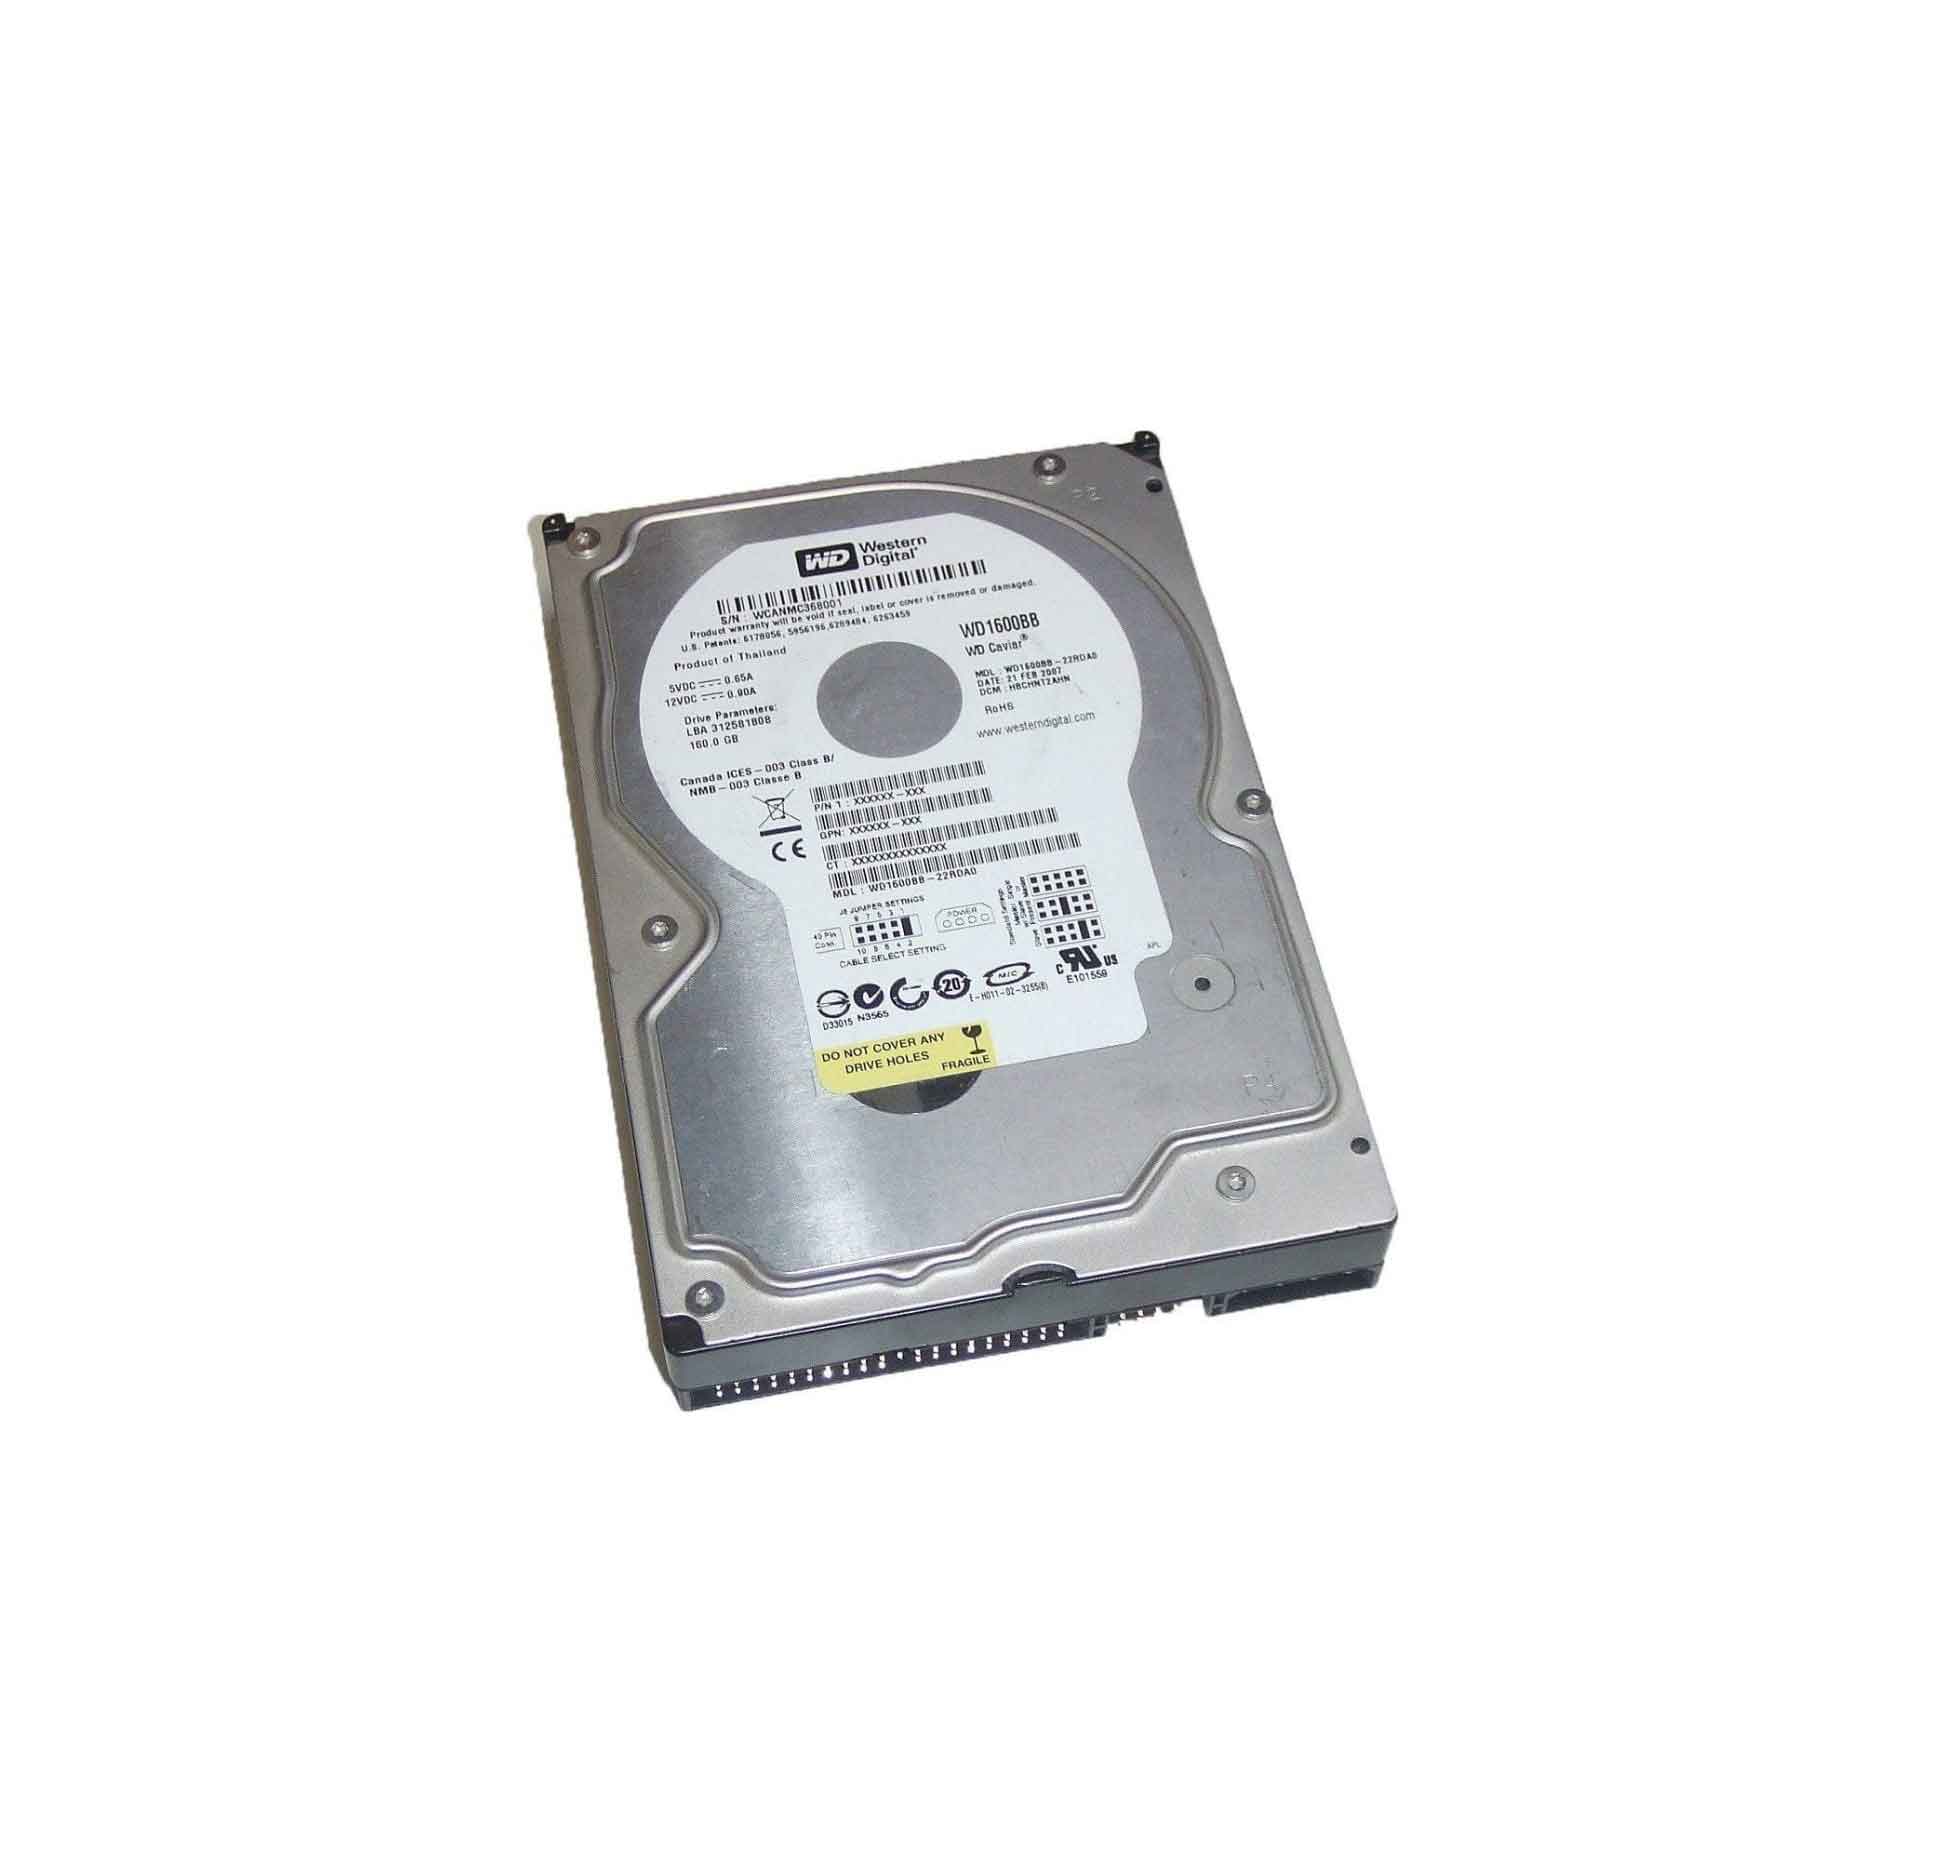 WD1600BEVT Western Digital 160GB 5 8MB Buffer Hard Drive